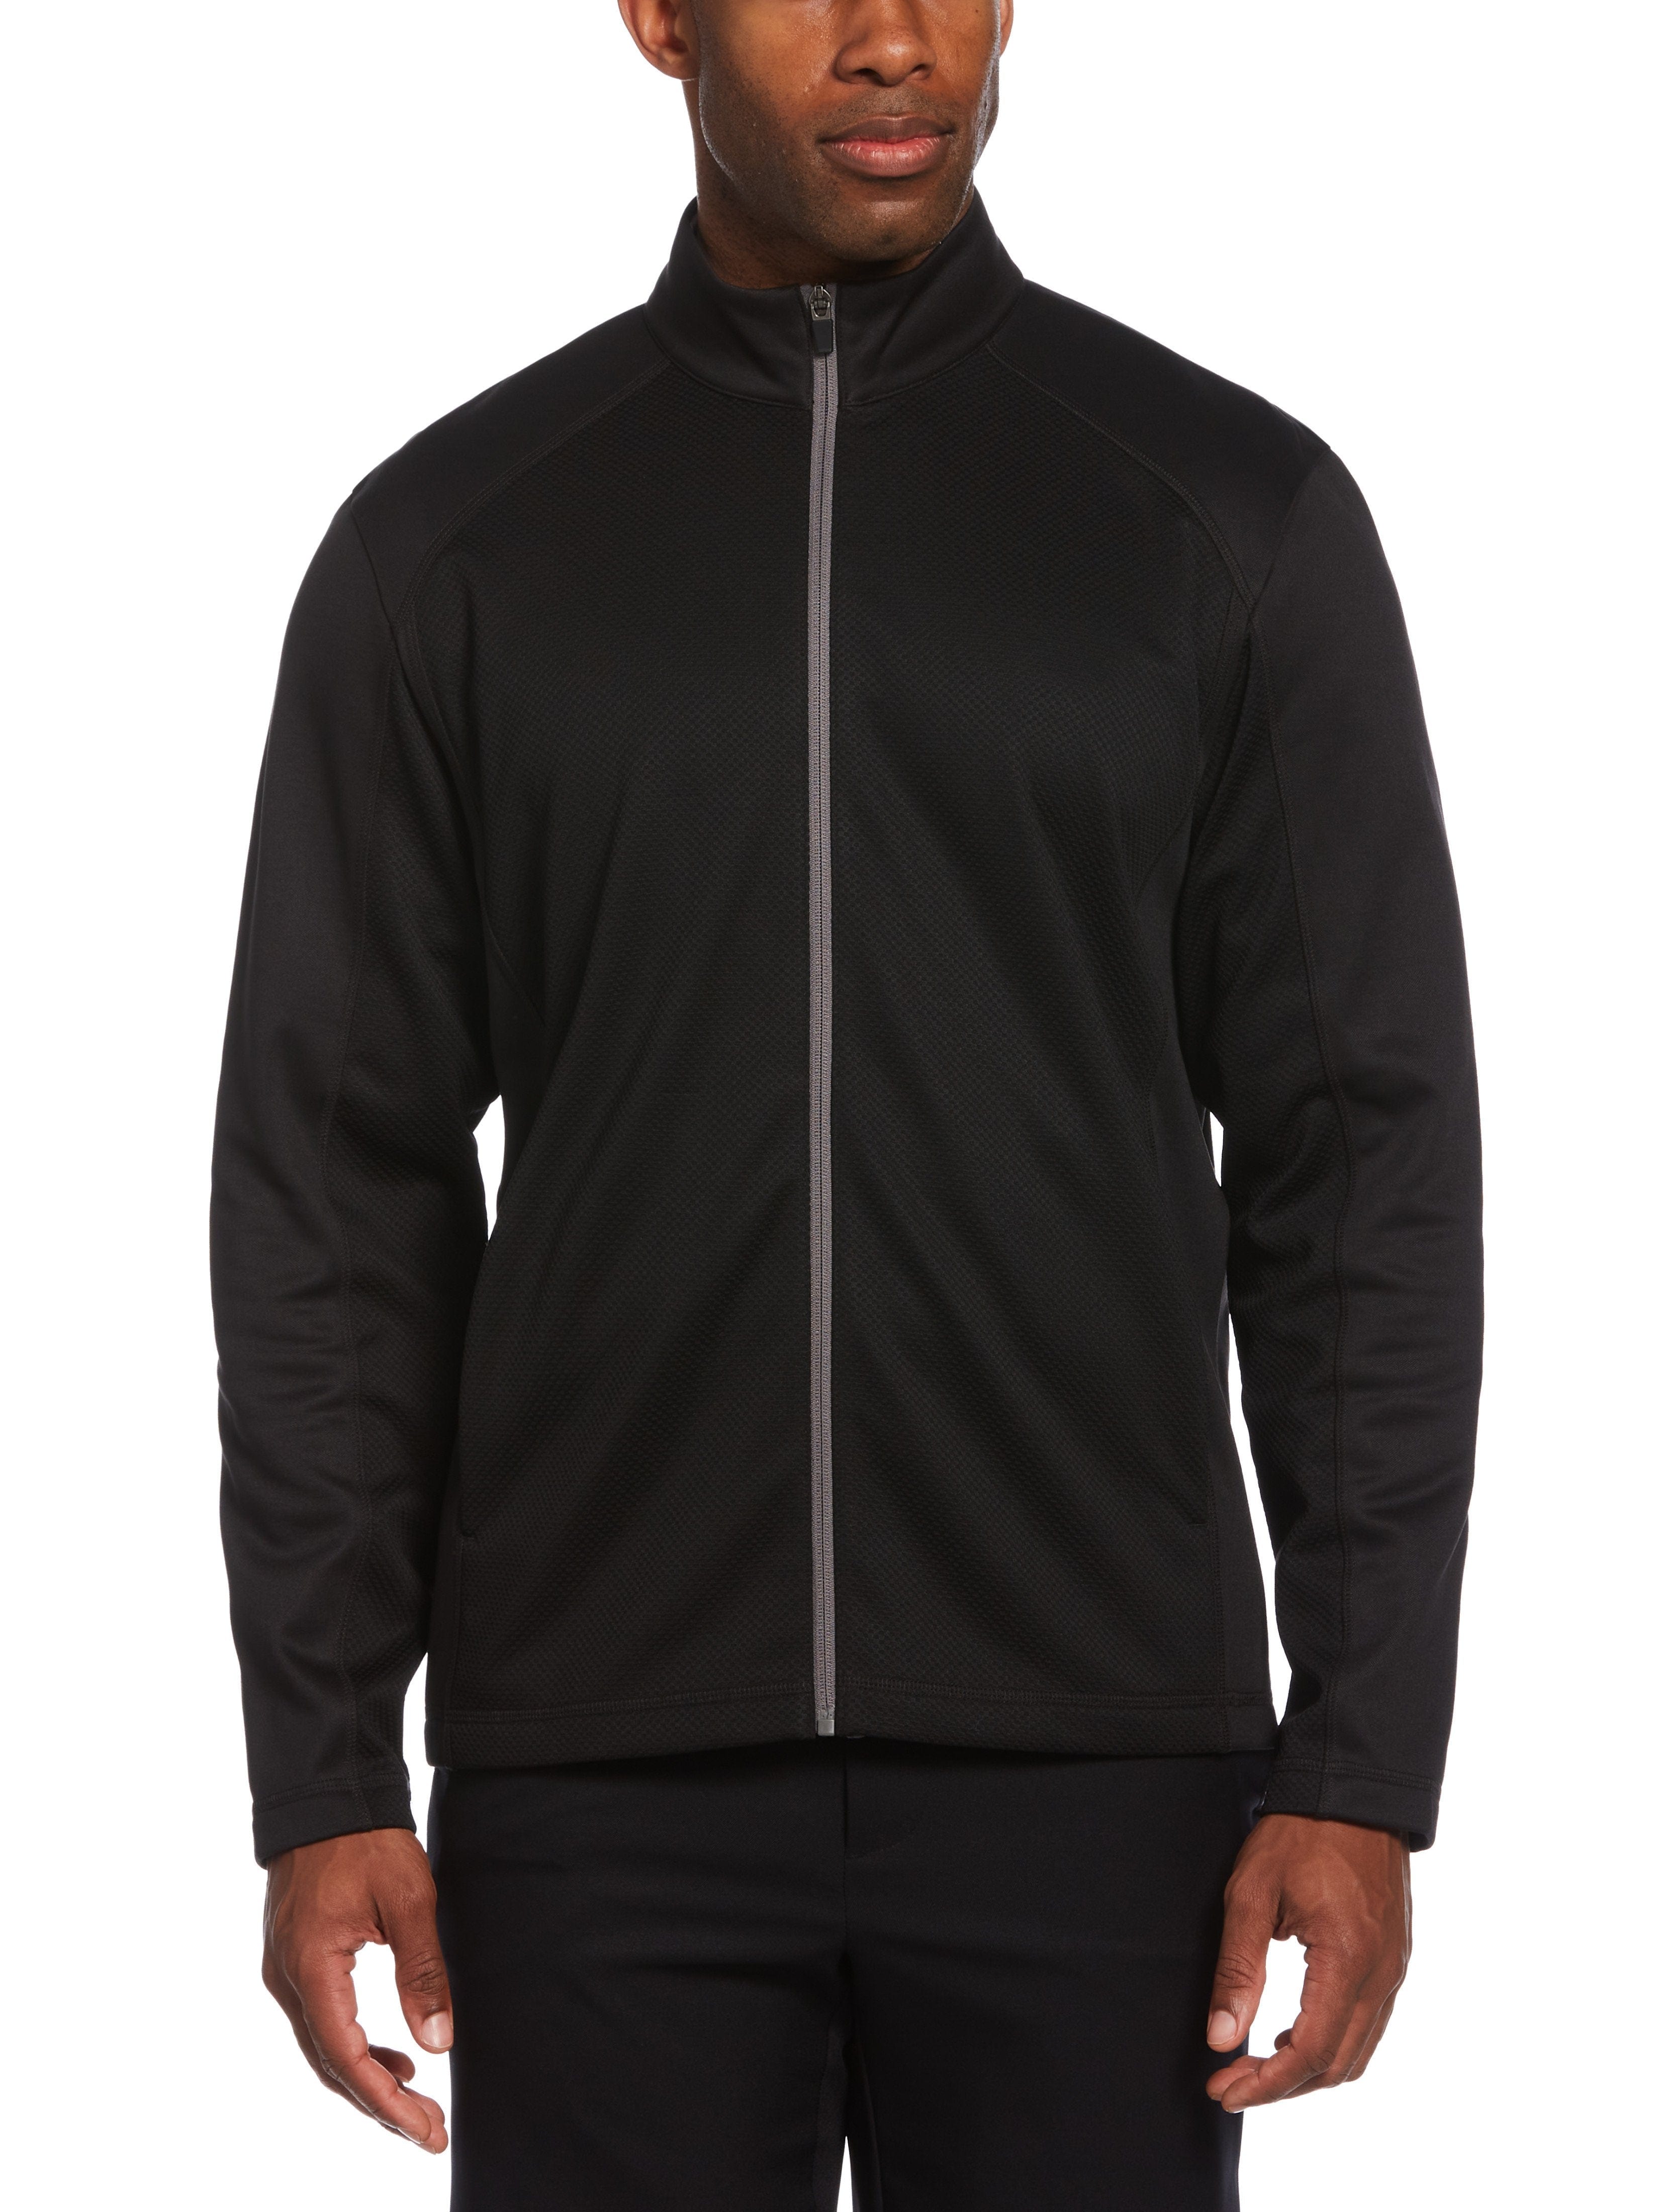 PGA TOUR Apparel Mens Mixed Texture Fleece Golf Jacket Top, Size Large, Black, 100% Polyester | Golf Apparel Shop